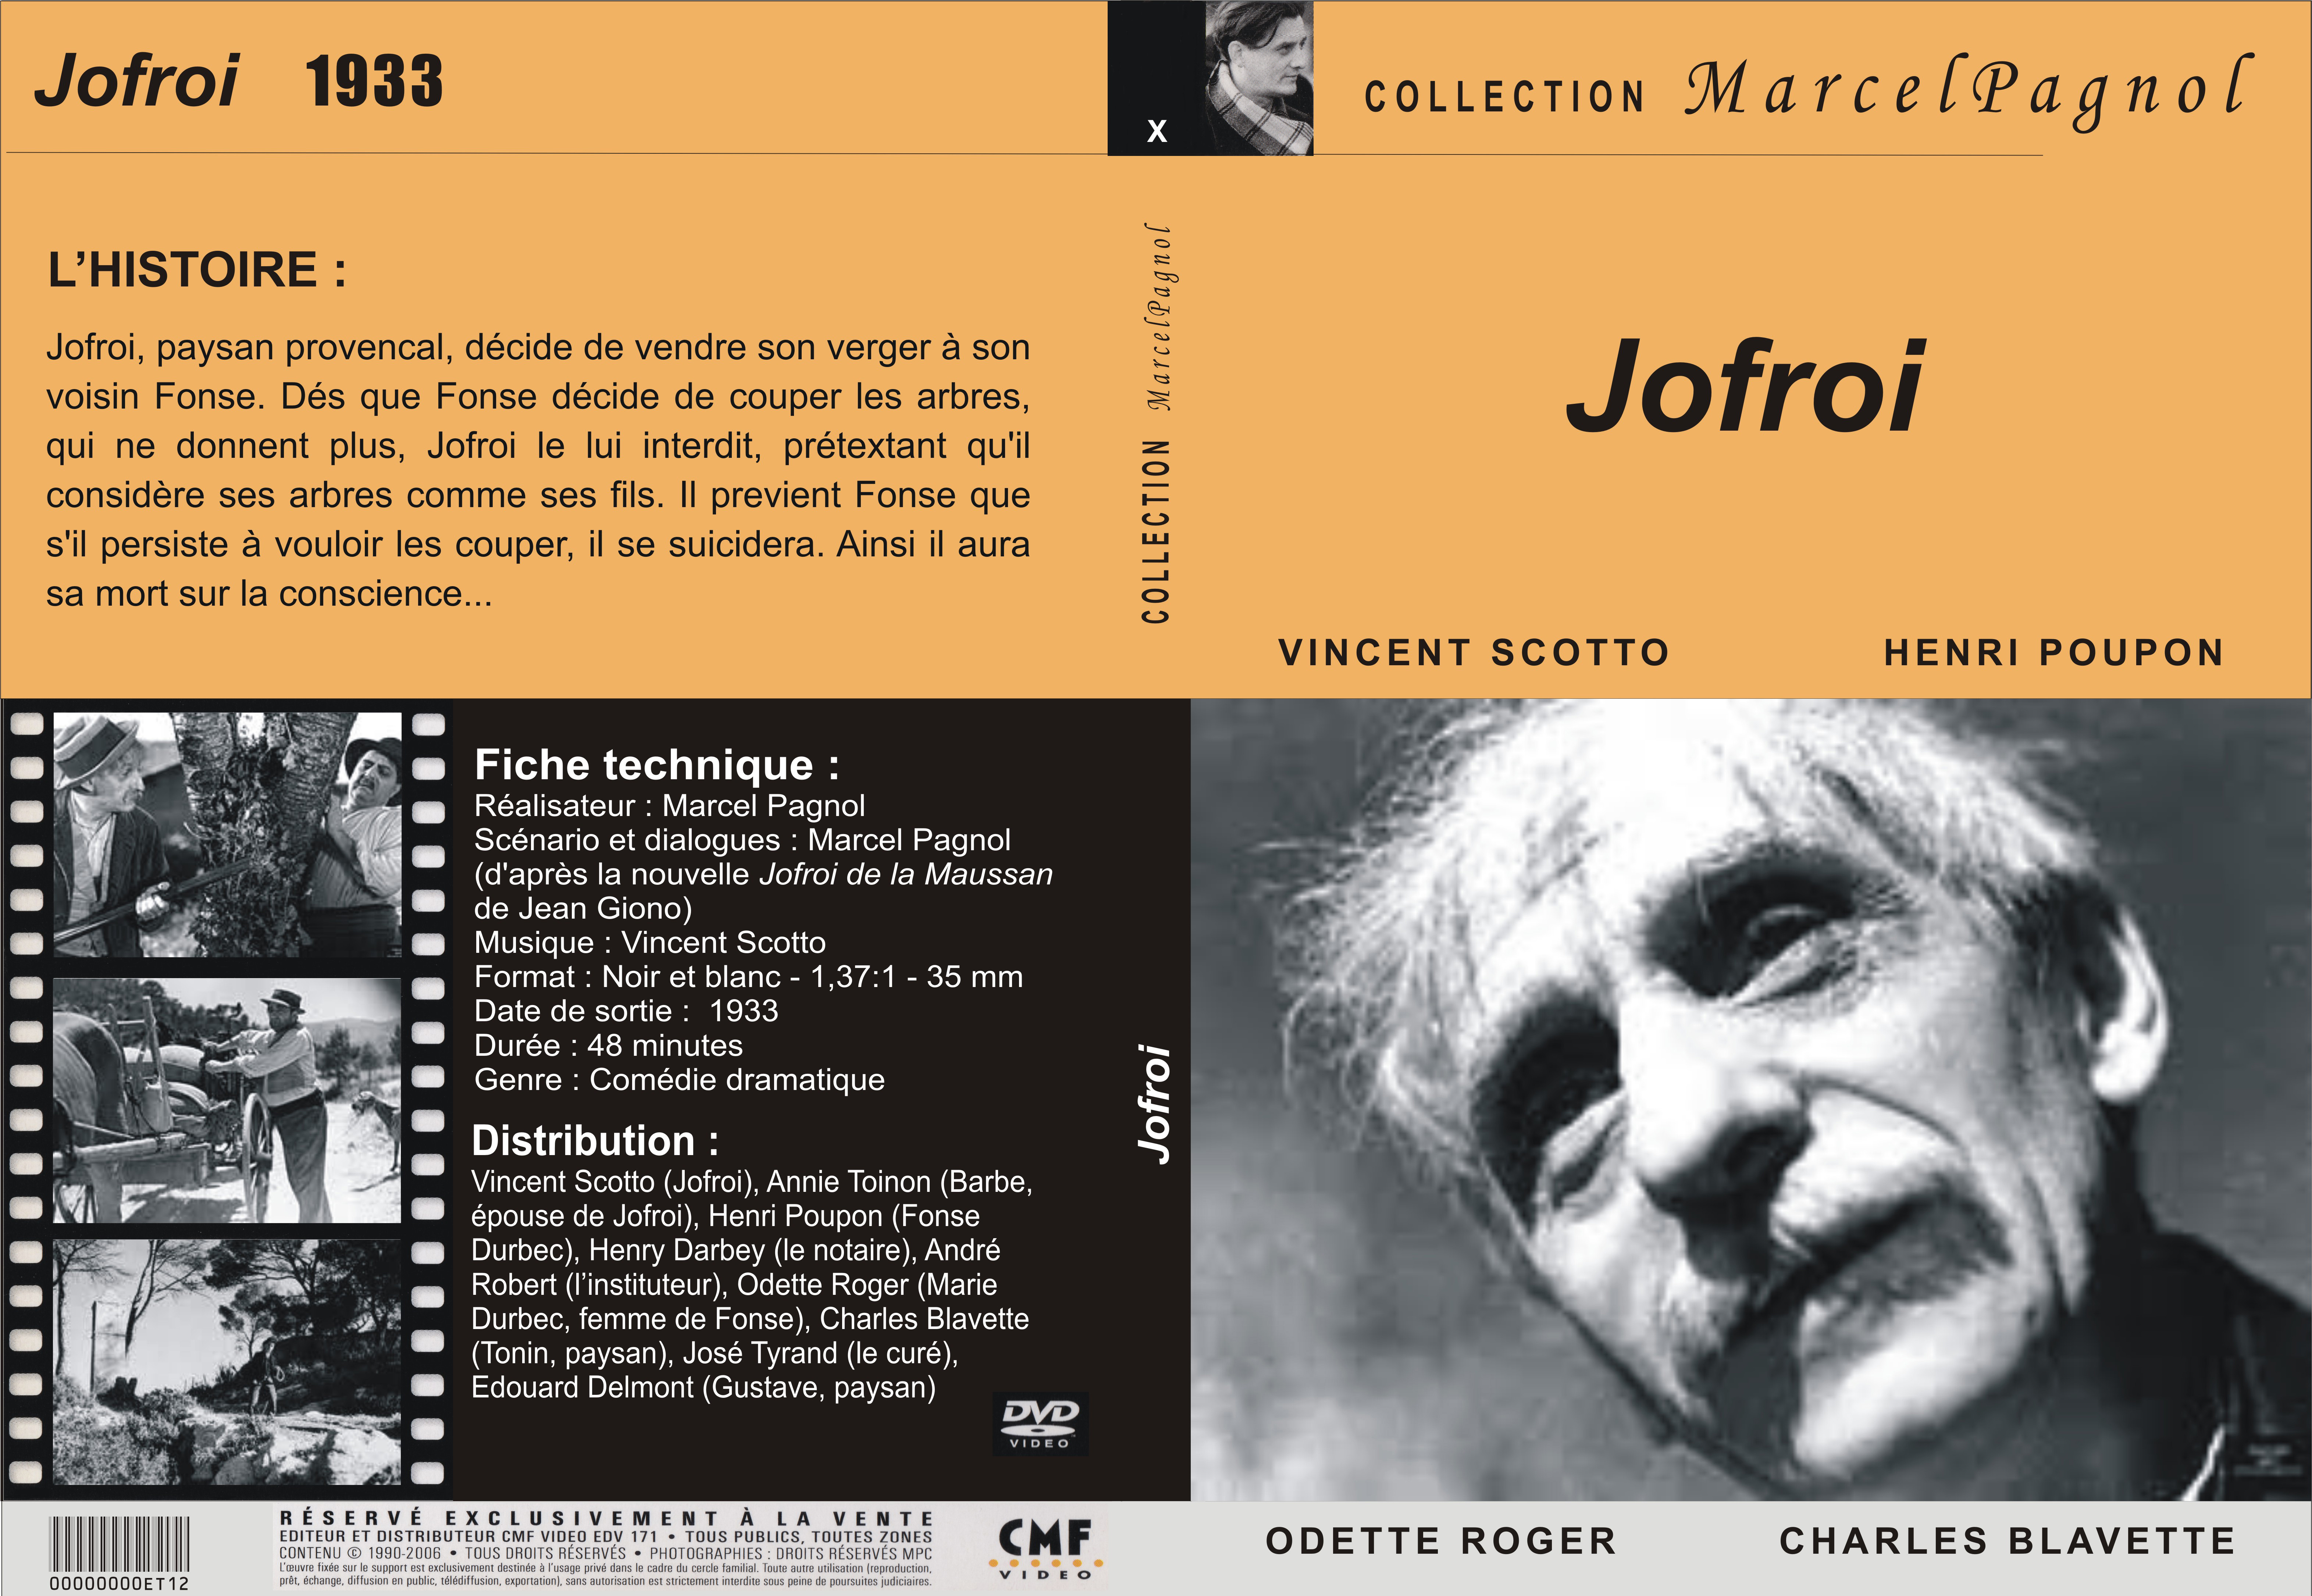 Jaquette DVD Jofroi custom v2